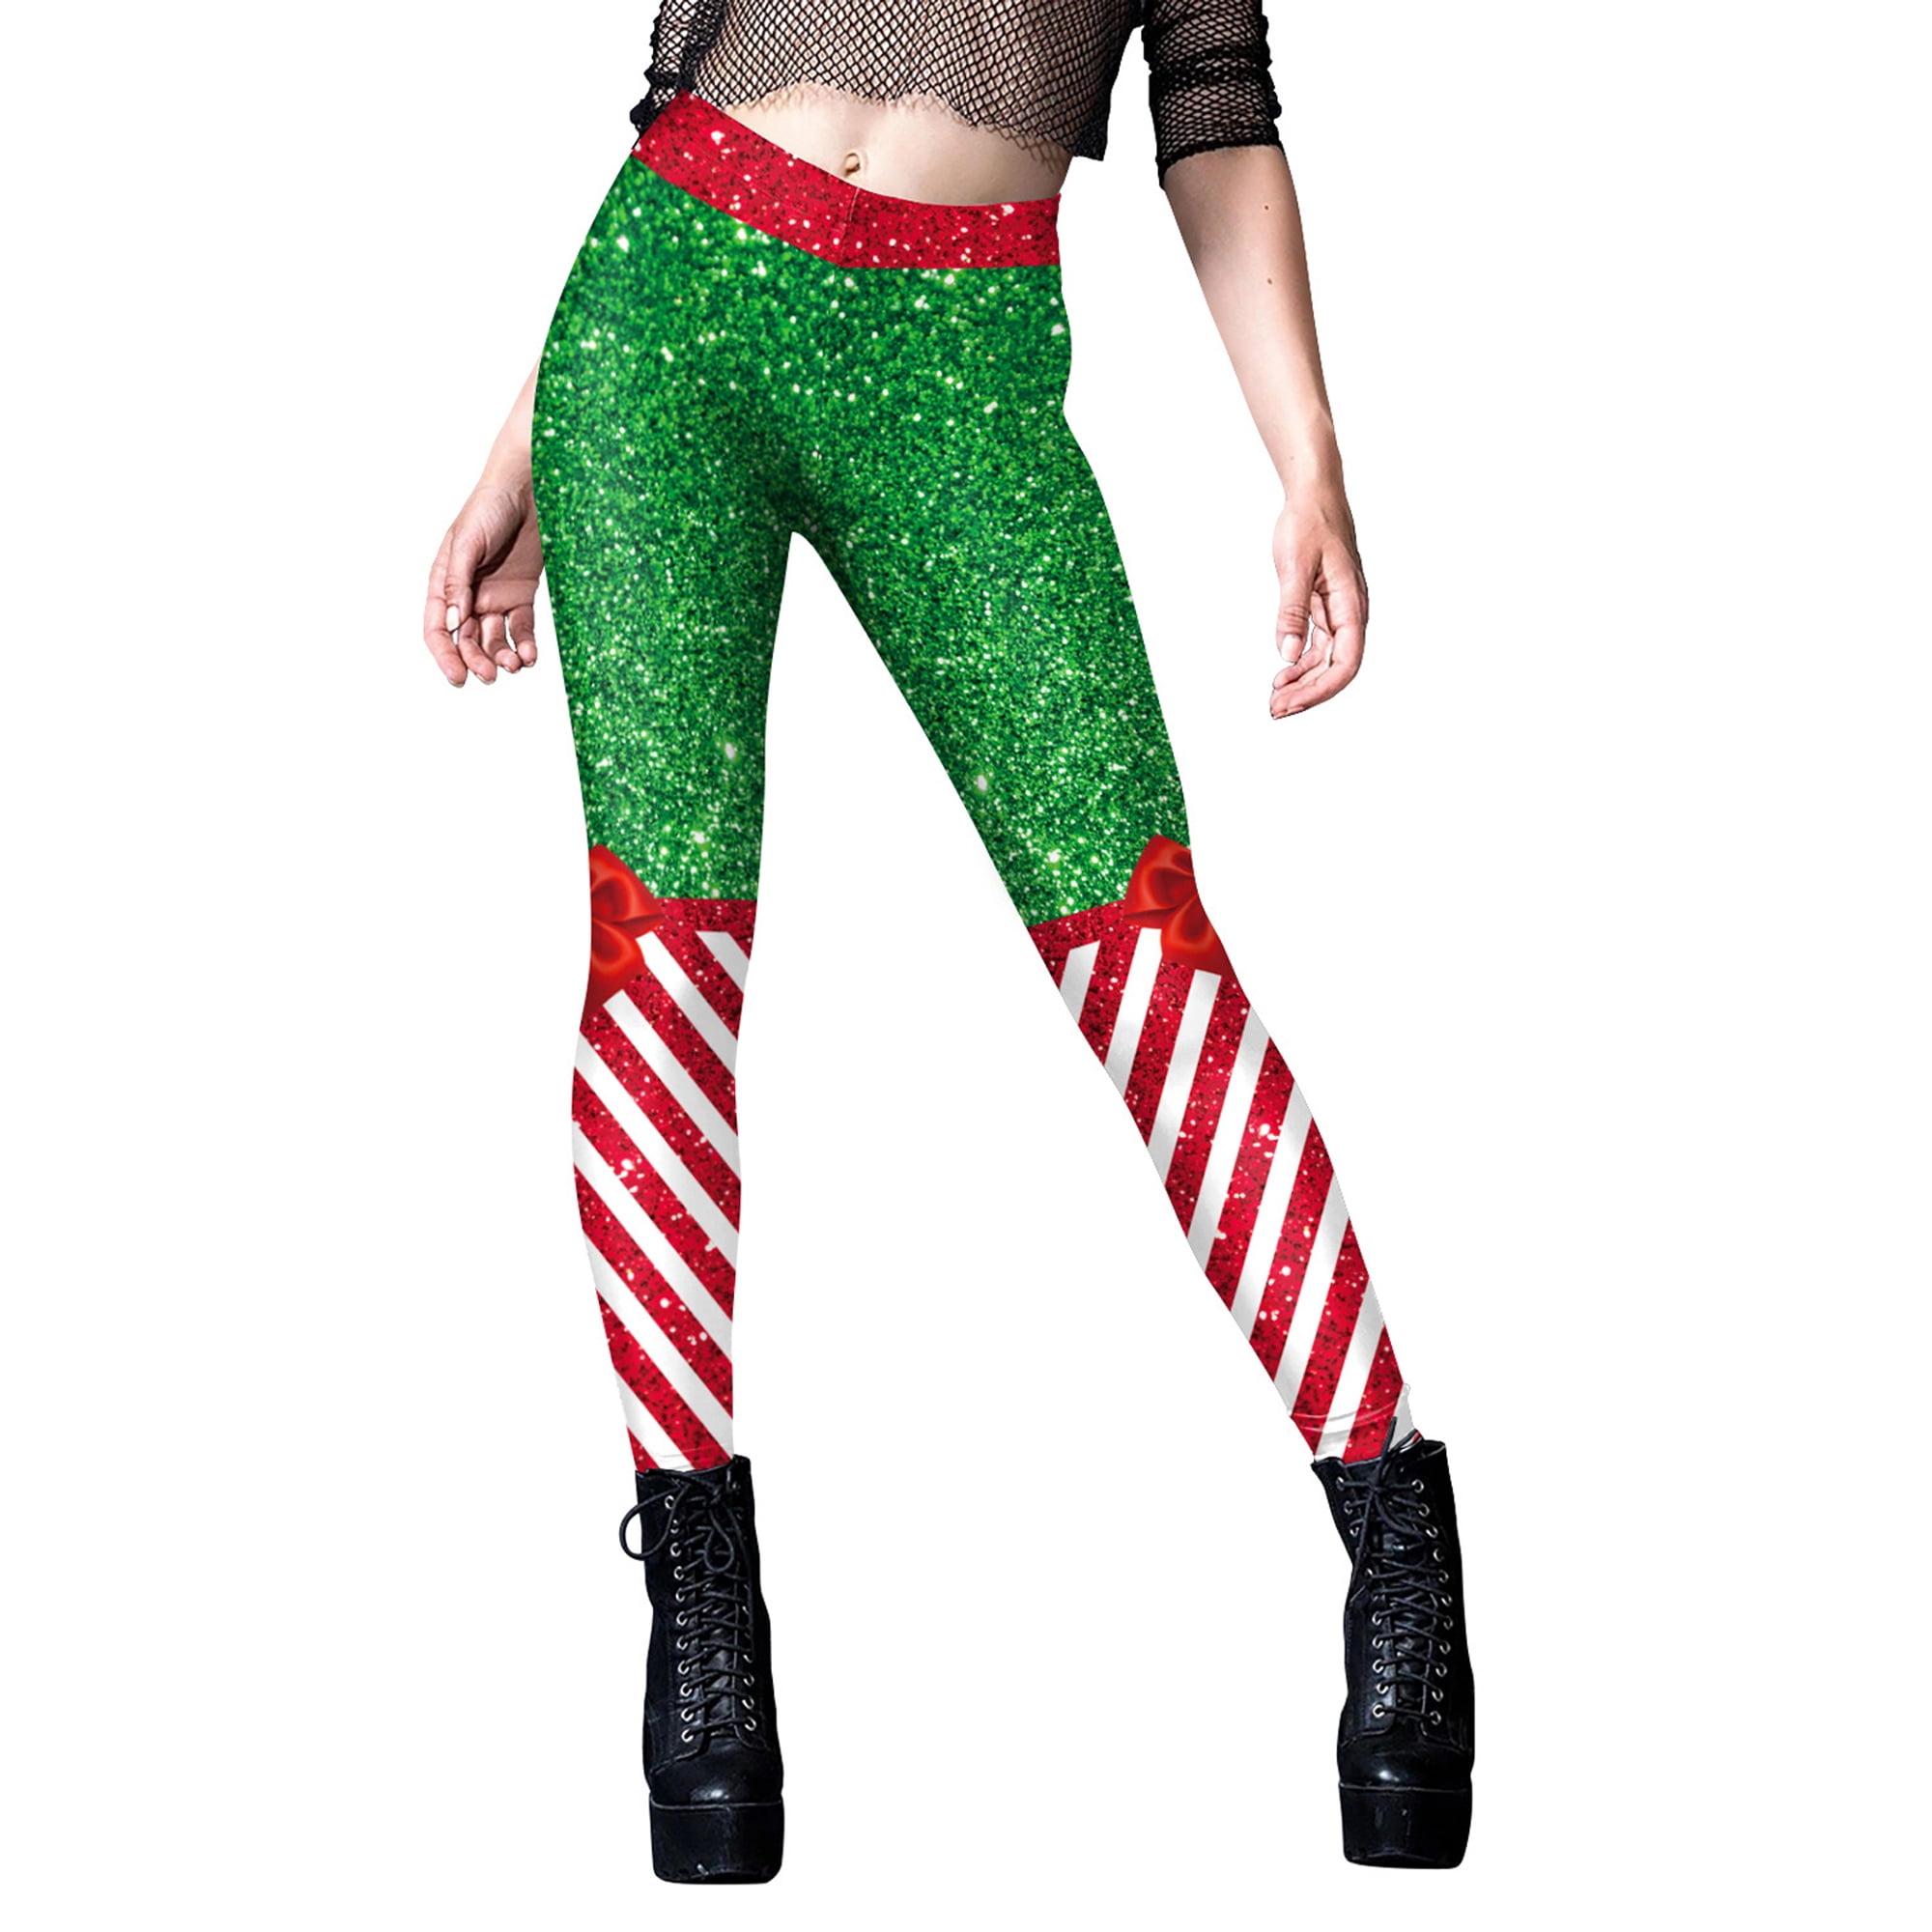 Womens Funny Printed Ugly Christmas Leggings High Waist Stretchy